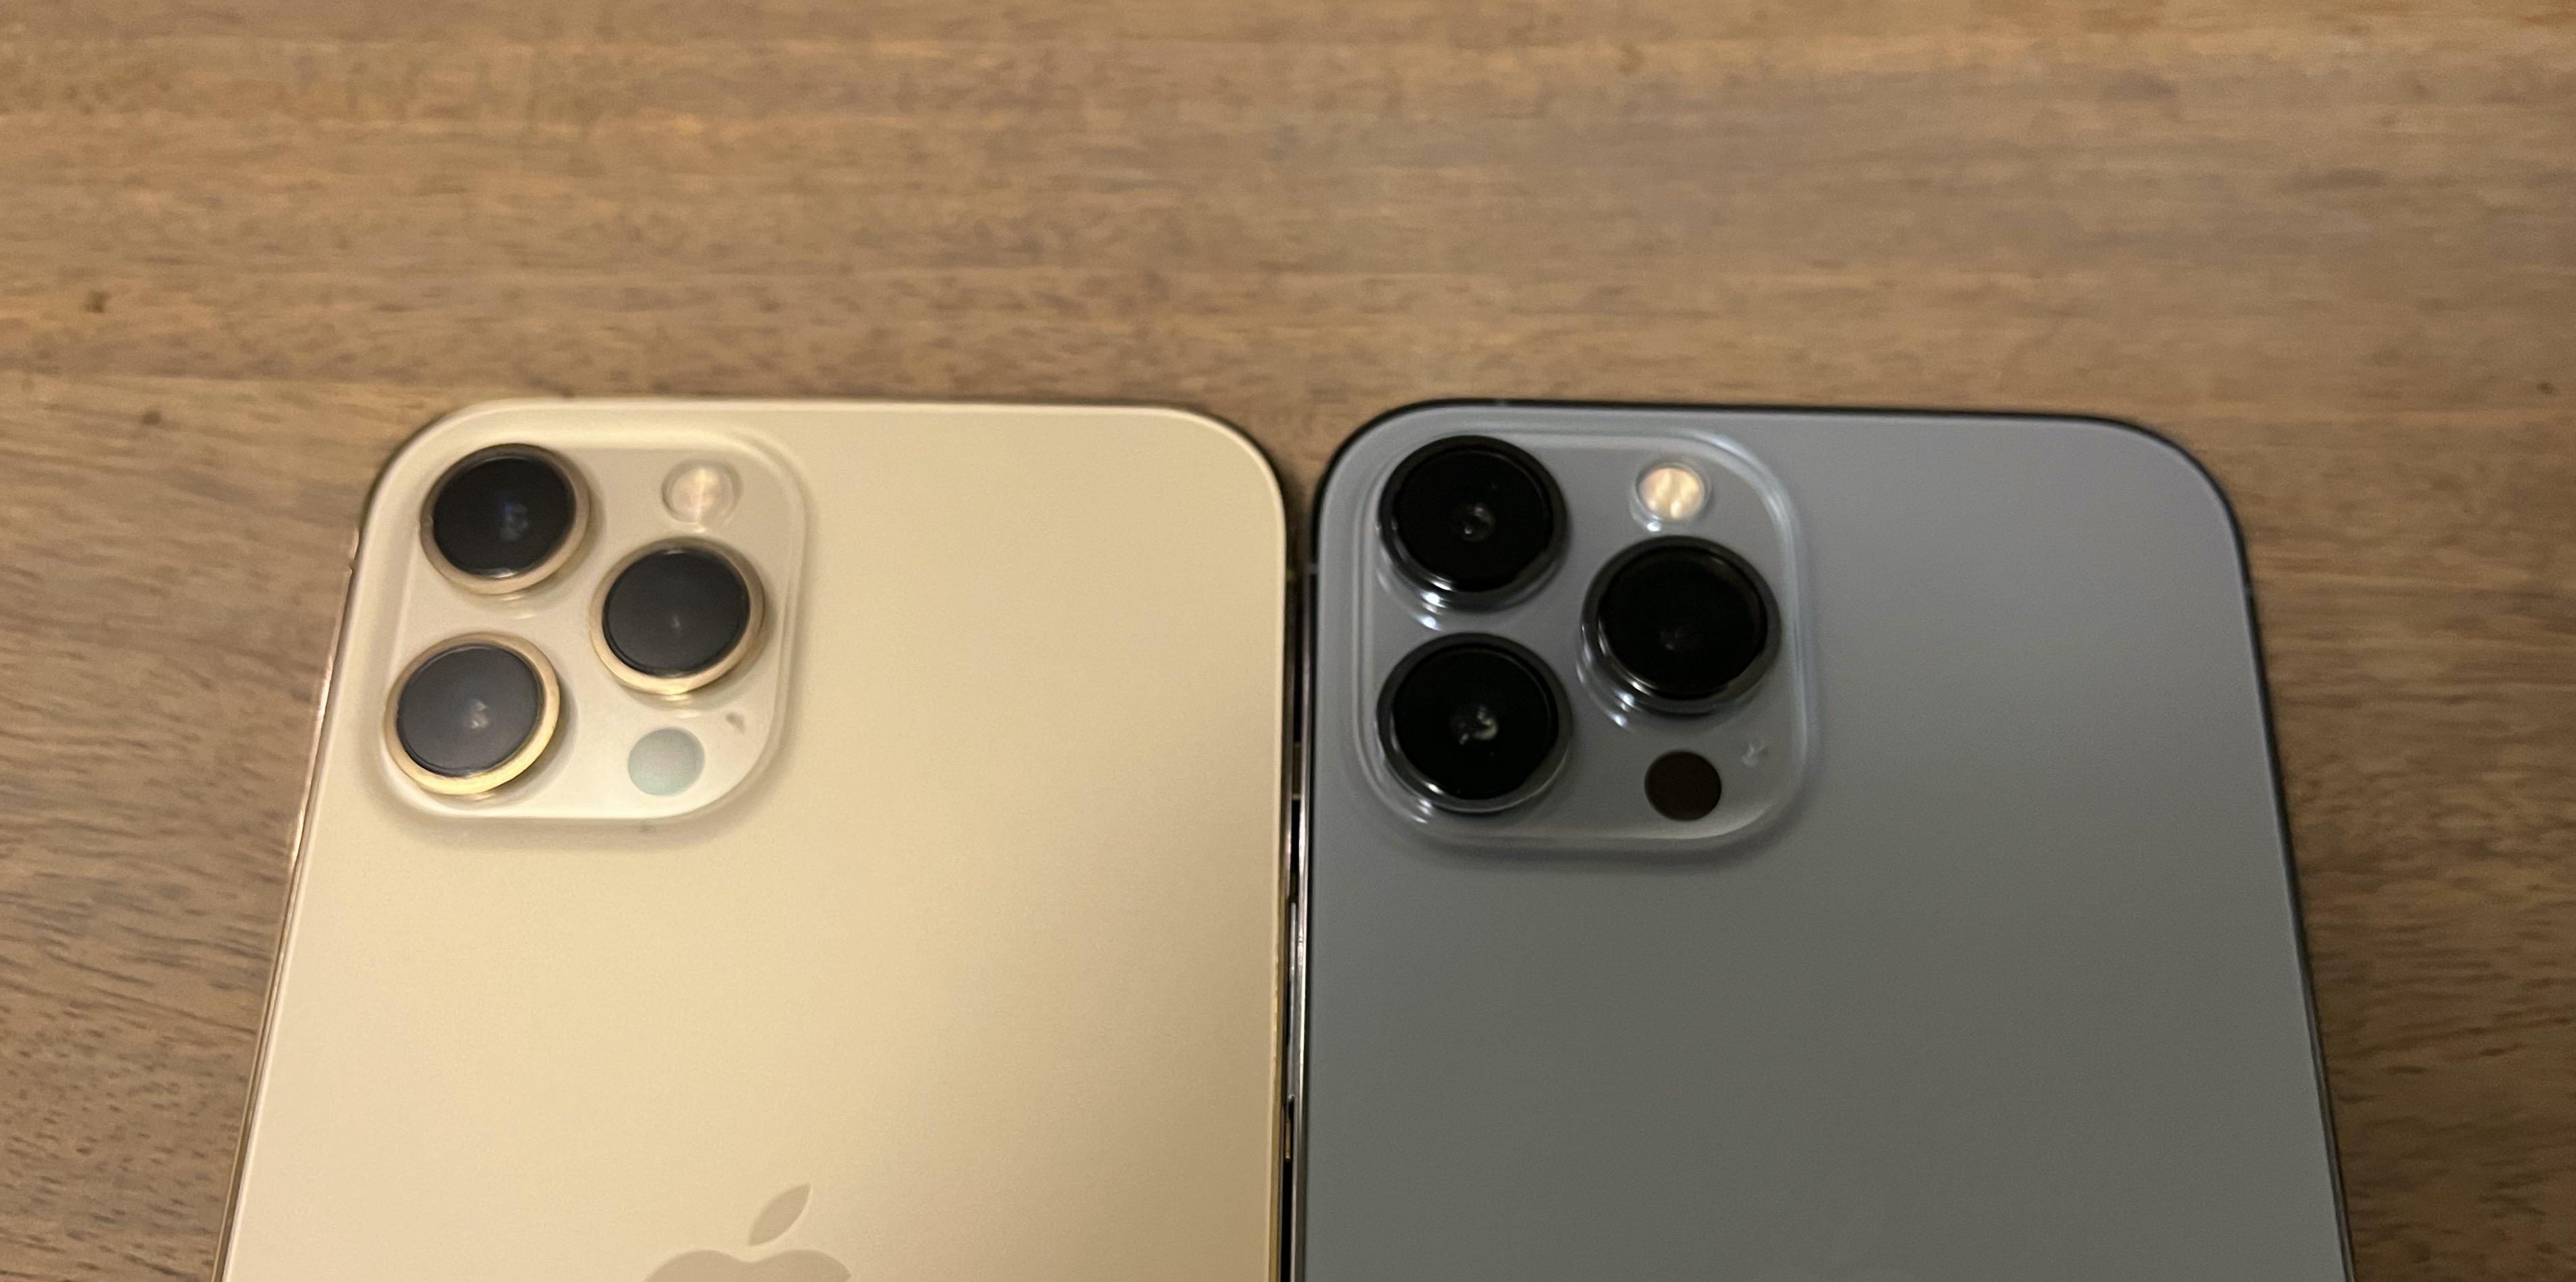 iphone 12 pro colors vs iphone 13 pro colors